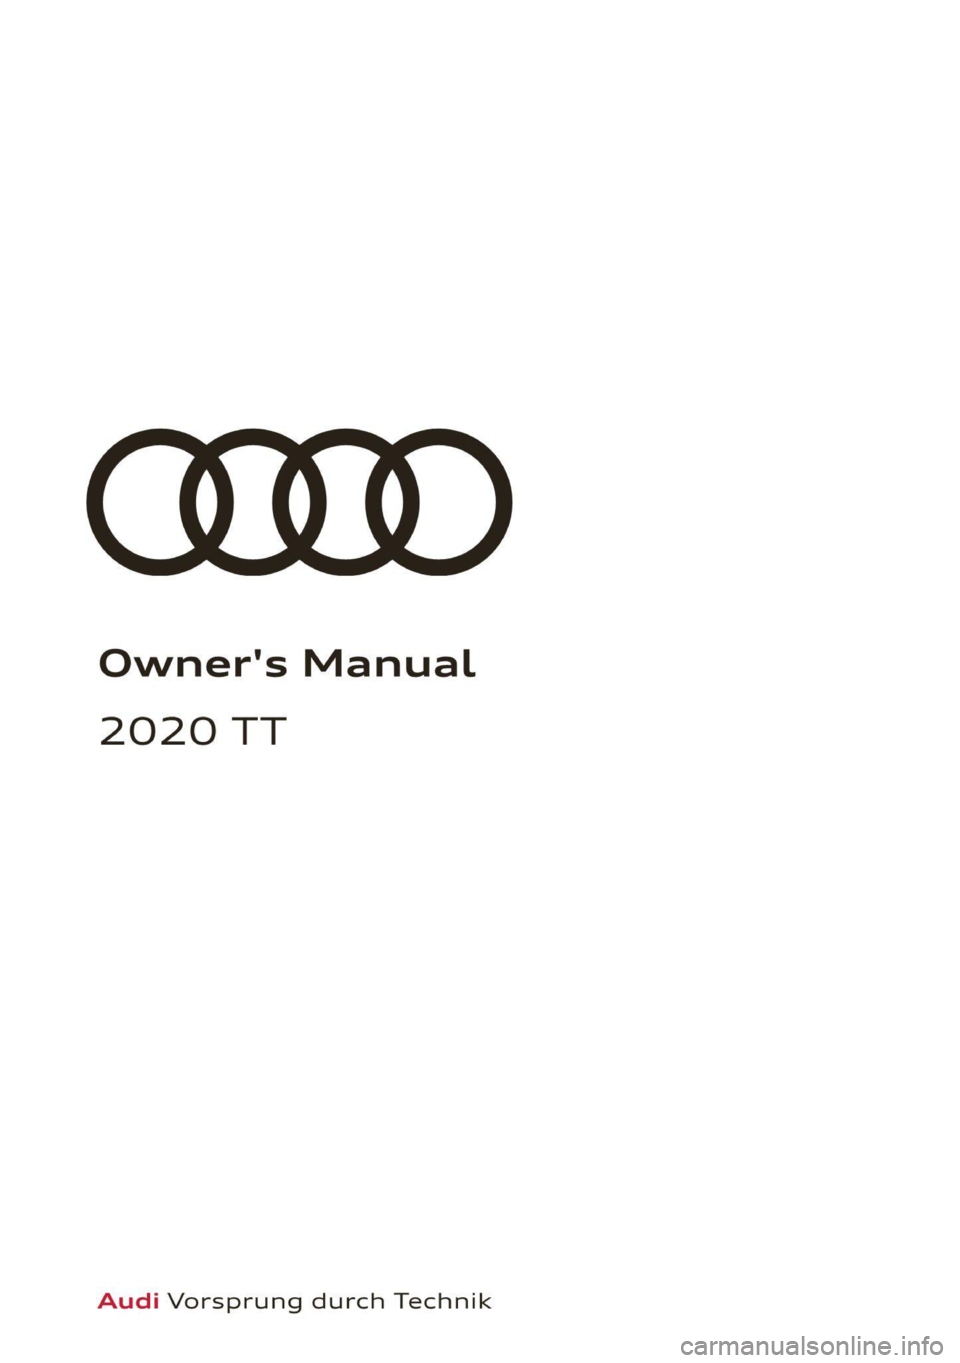 AUDI TT COUPE 2020  Owners Manual Owner's Manual 
2020 TT 
Audi Vorsprung durch Technik  